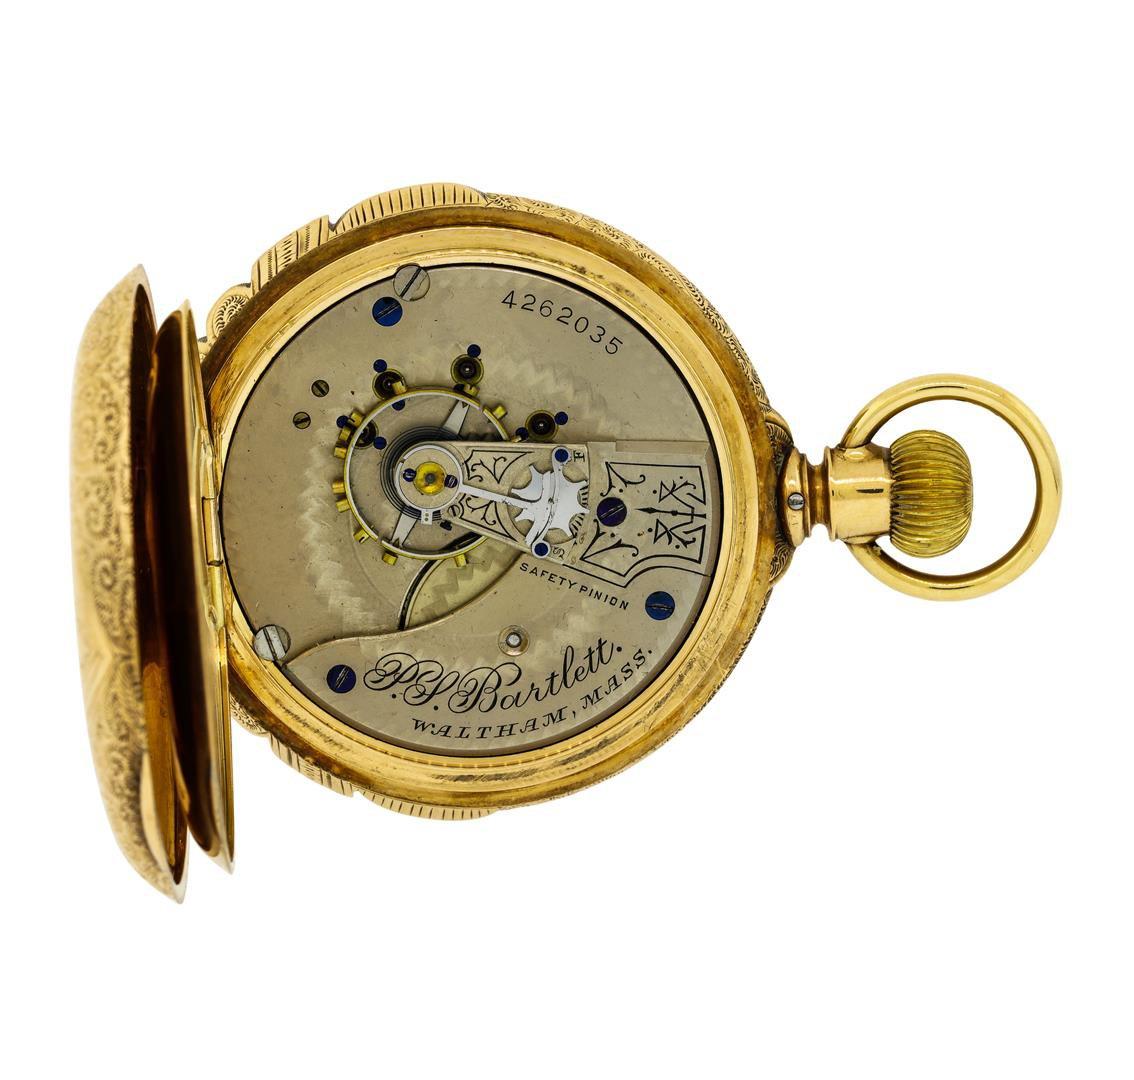 Vintage Waltham Pocket Watch - 14KT Yellow Gold